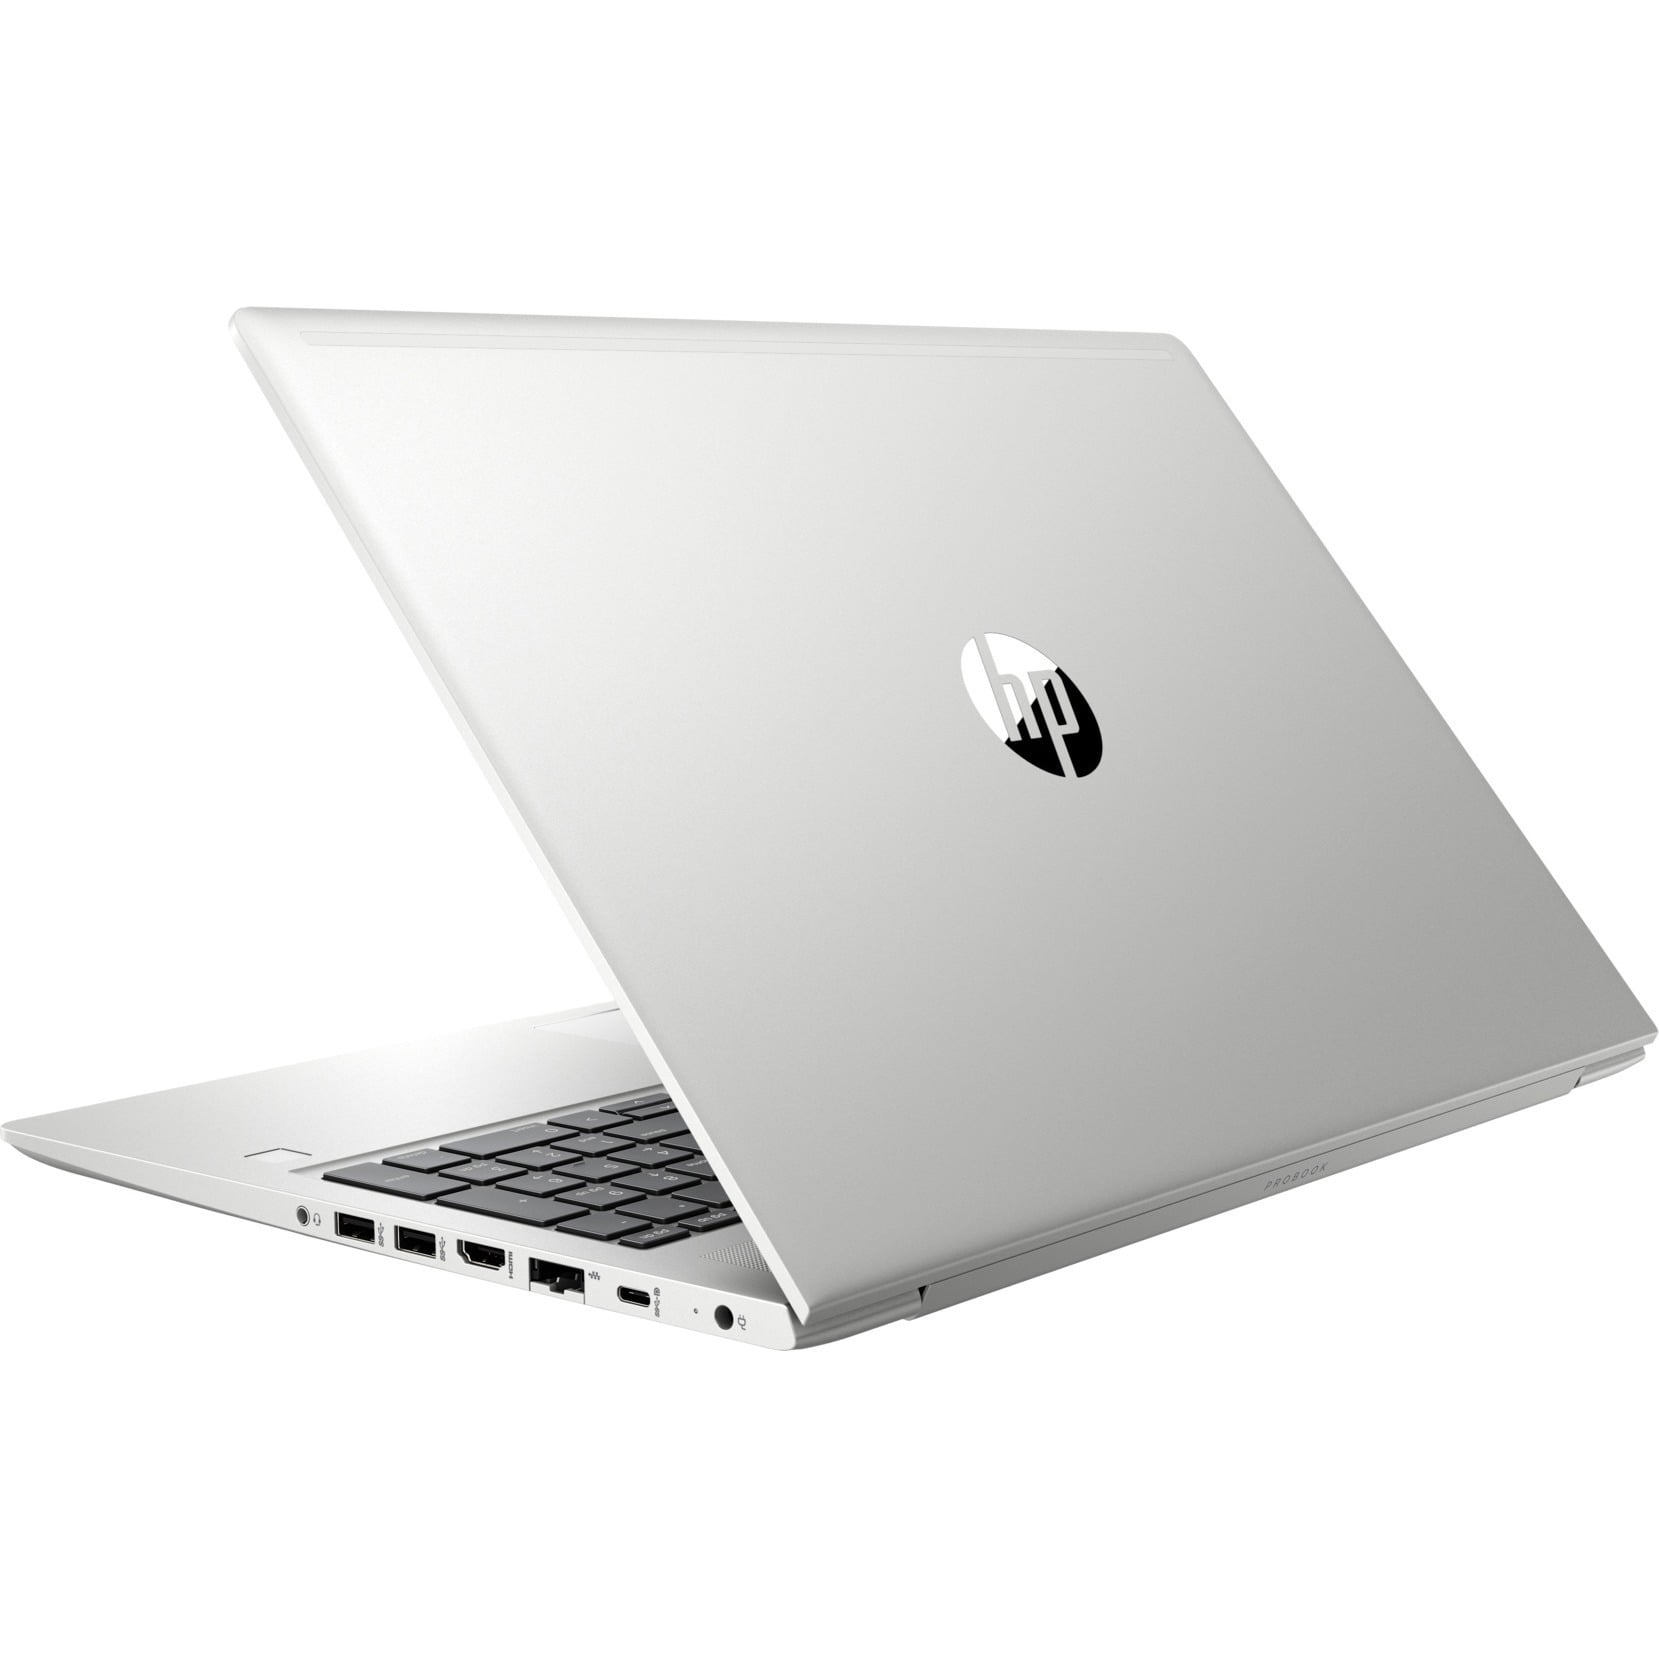 HP ProBook 430 G6 13.3 Notebook - Intel Core i5 - 4GB RAM - 128GB SSD -  Intel UHD Graphics 620 - Windows 10 Pro - Natural Silver - Walmart.com